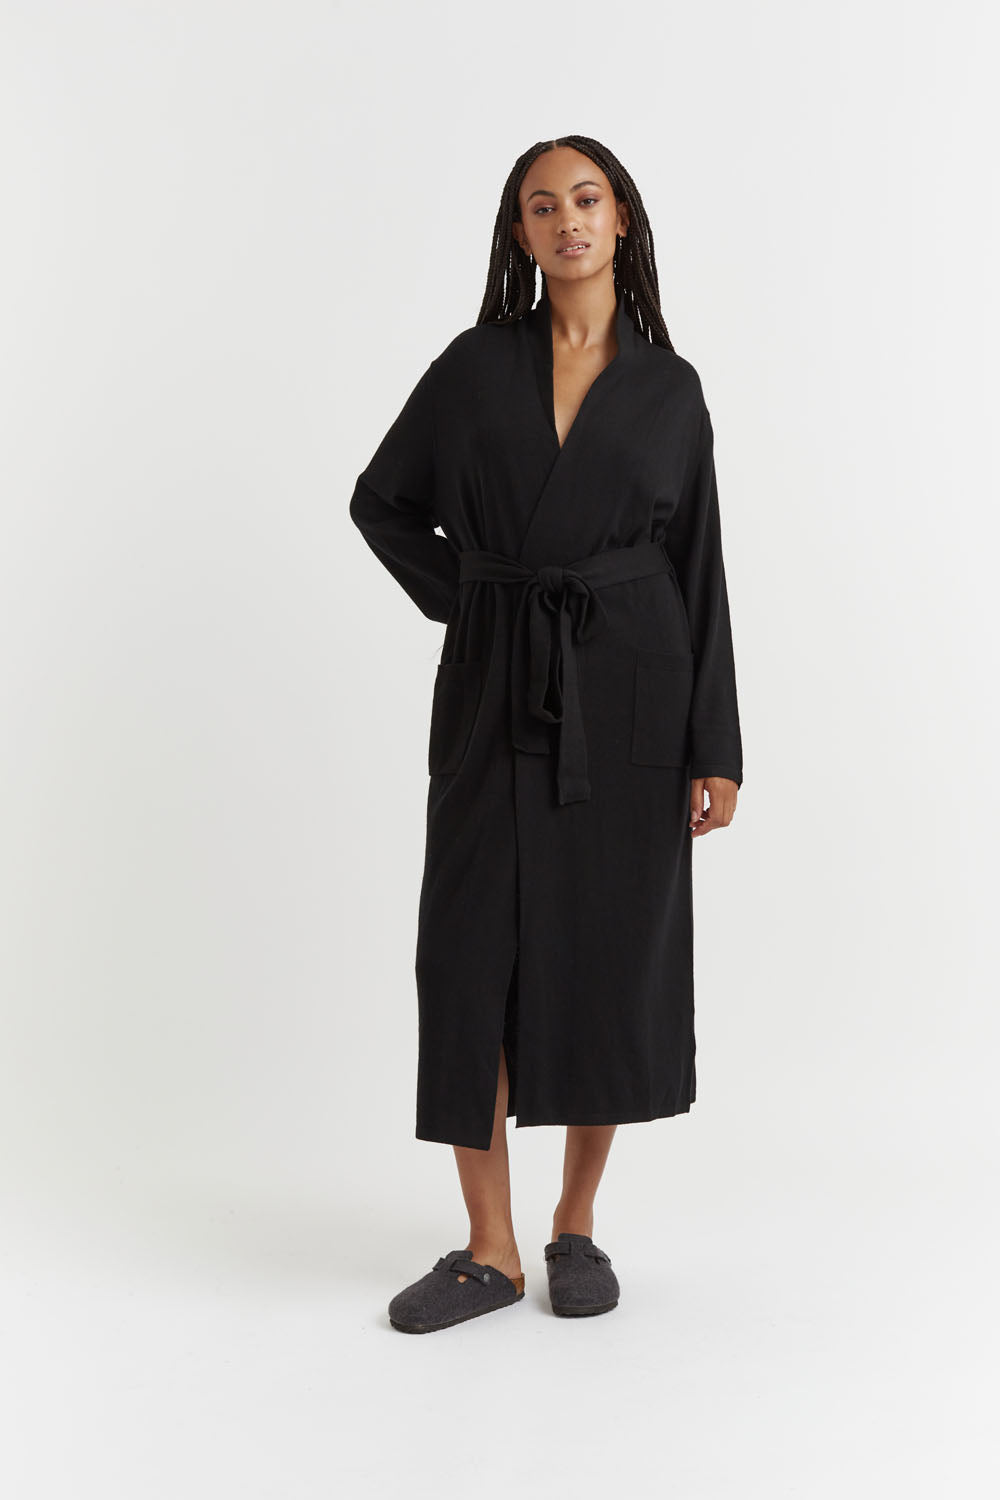 Papinelle | Washable Silk Long Robe in Black – Papinelle Sleepwear AU